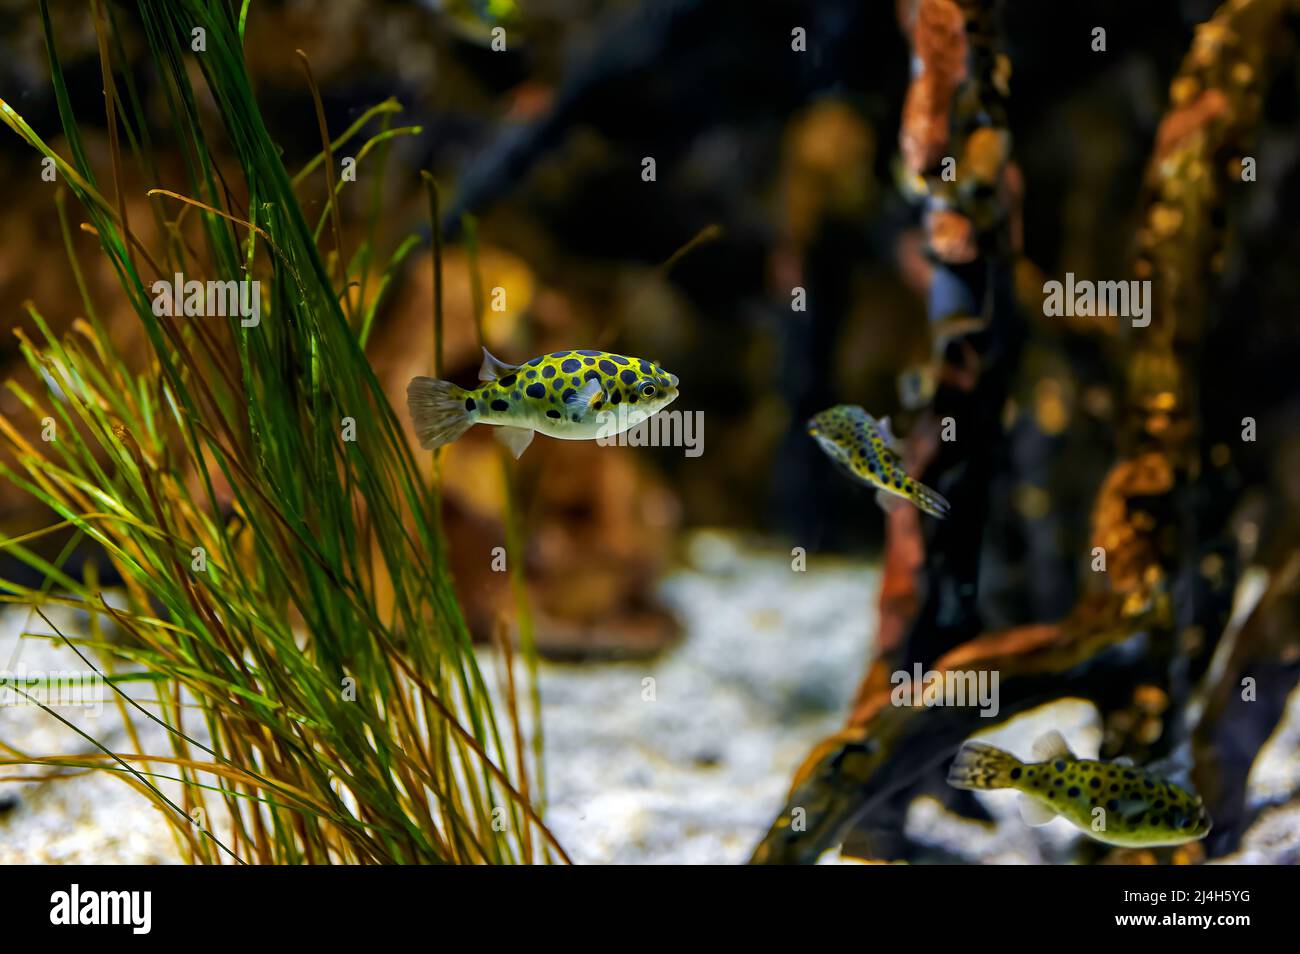 Green pufferfish or speckled pufferfish (Dichotomyctere nigroviridis) in an aquarium with marine vegetation Stock Photo